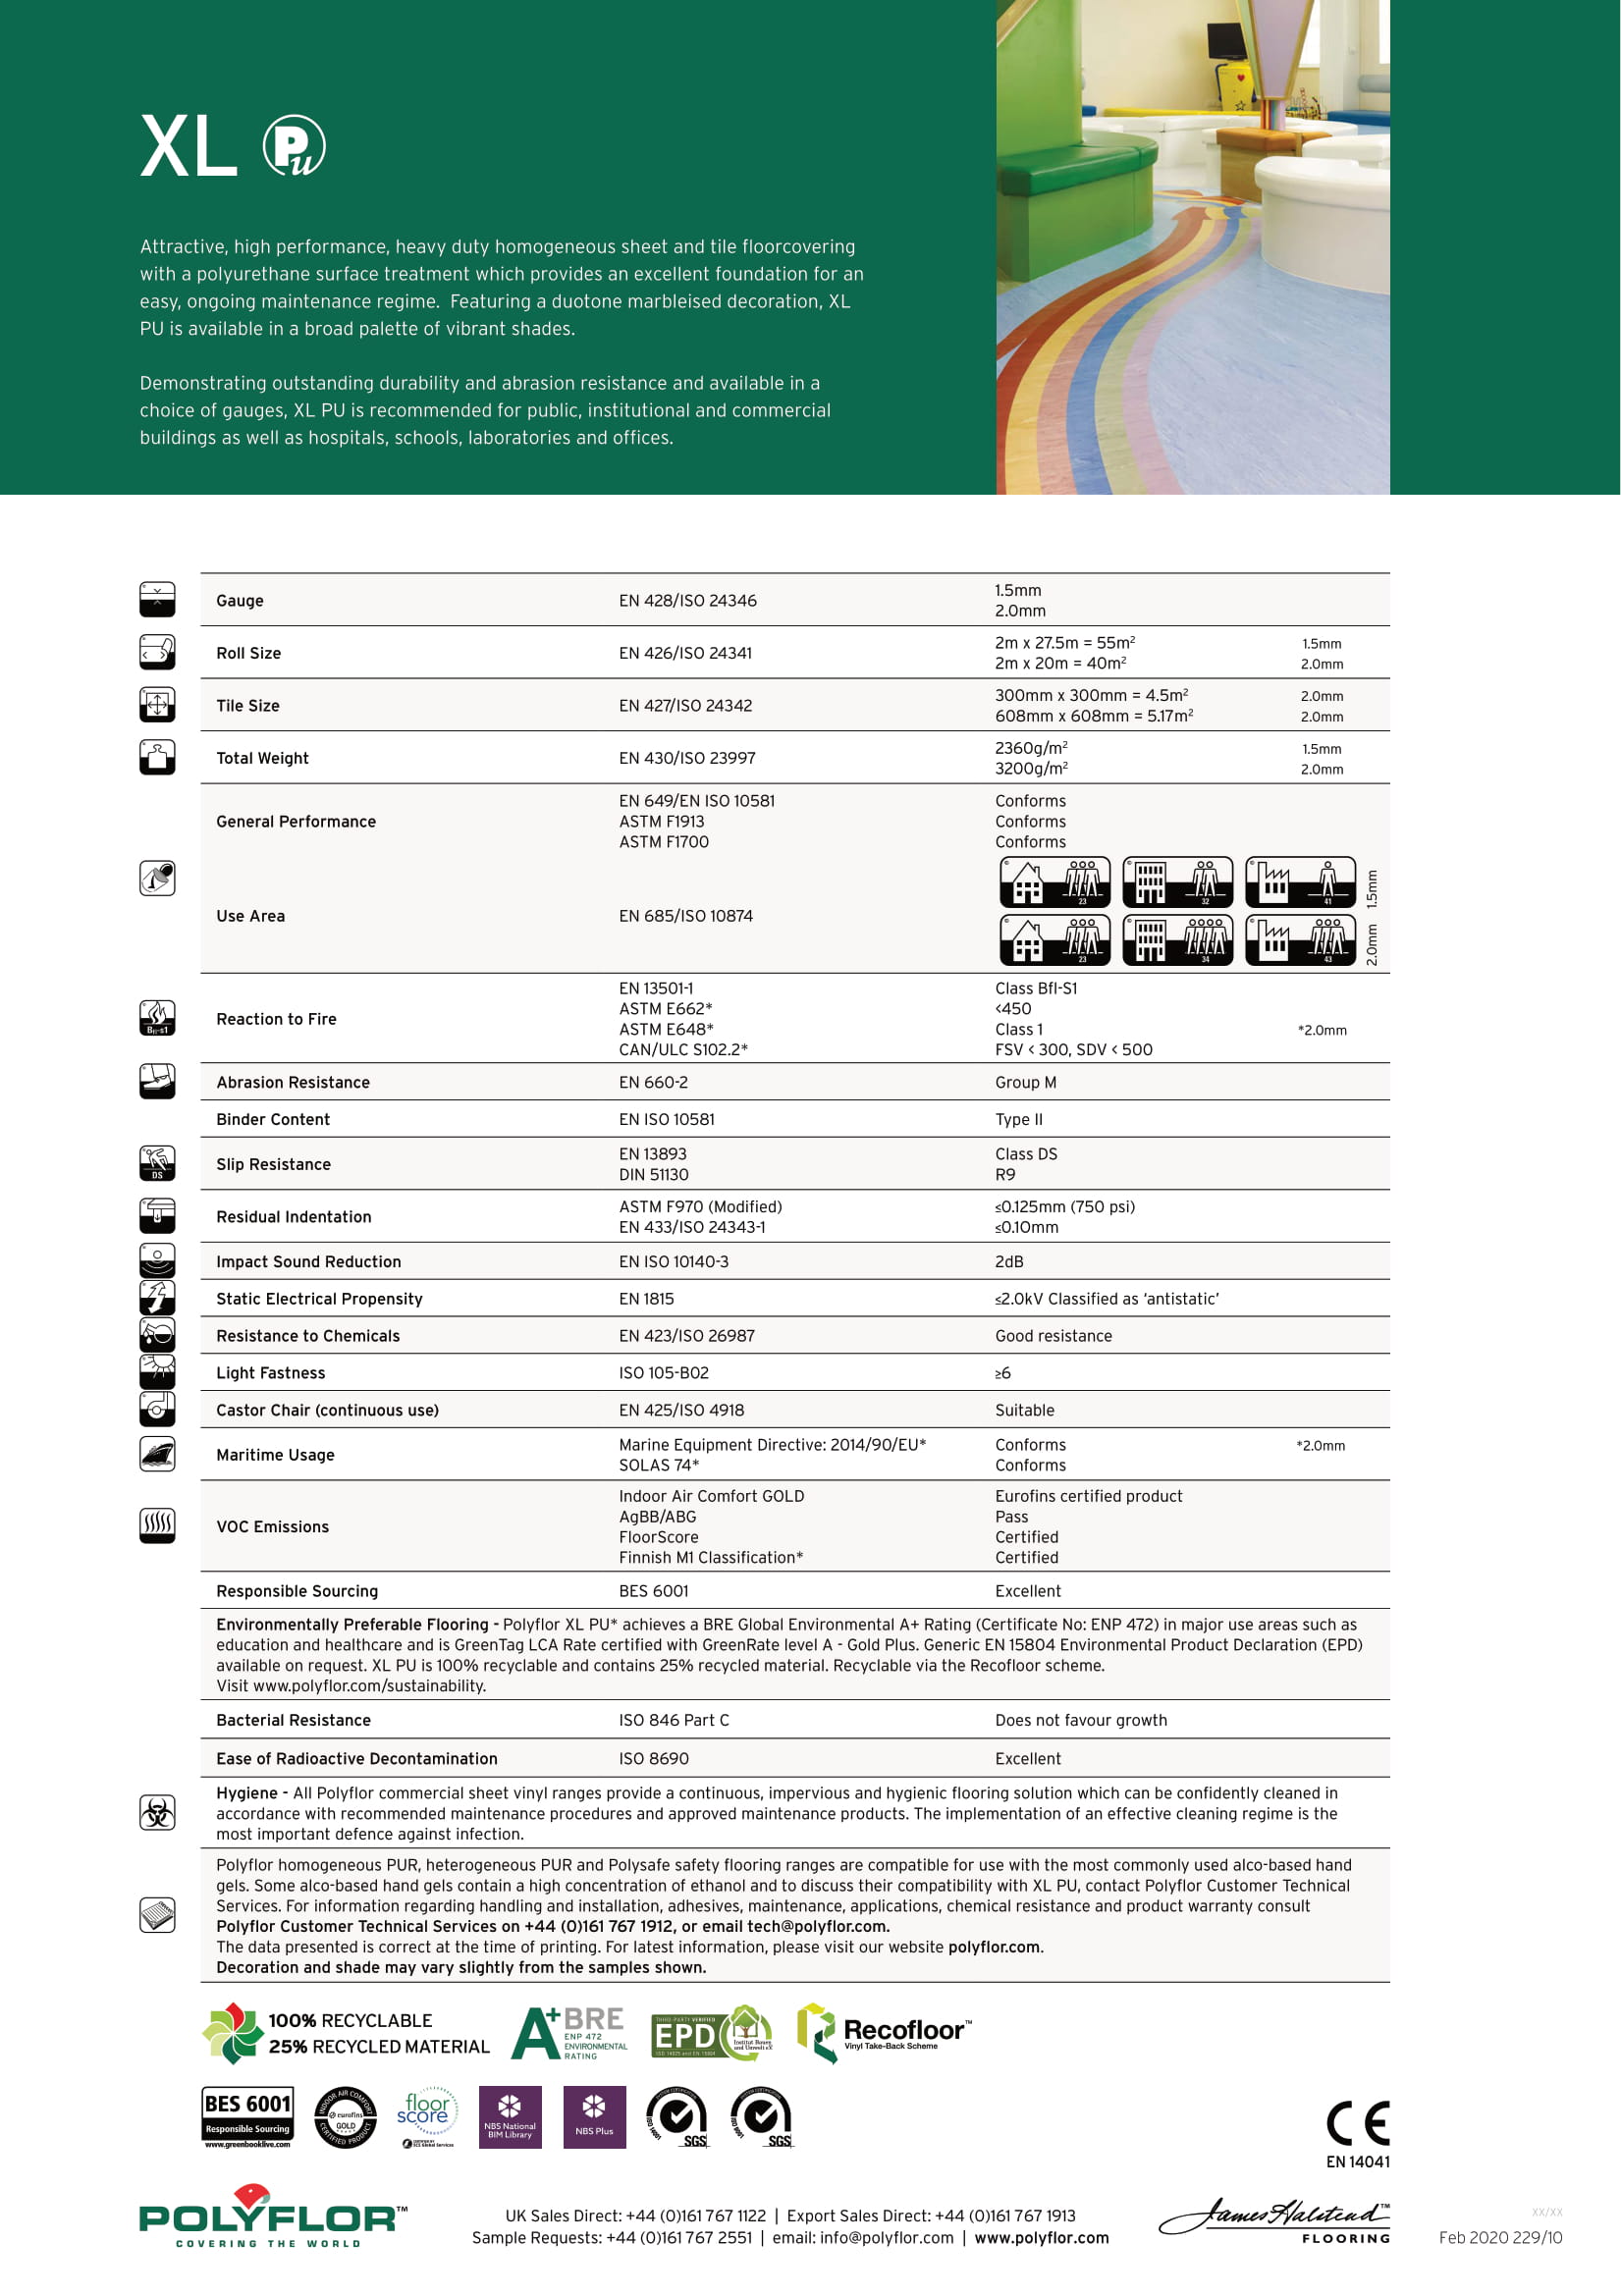 Homogeneous Polyflor XL PU -  Connemara Green Specs